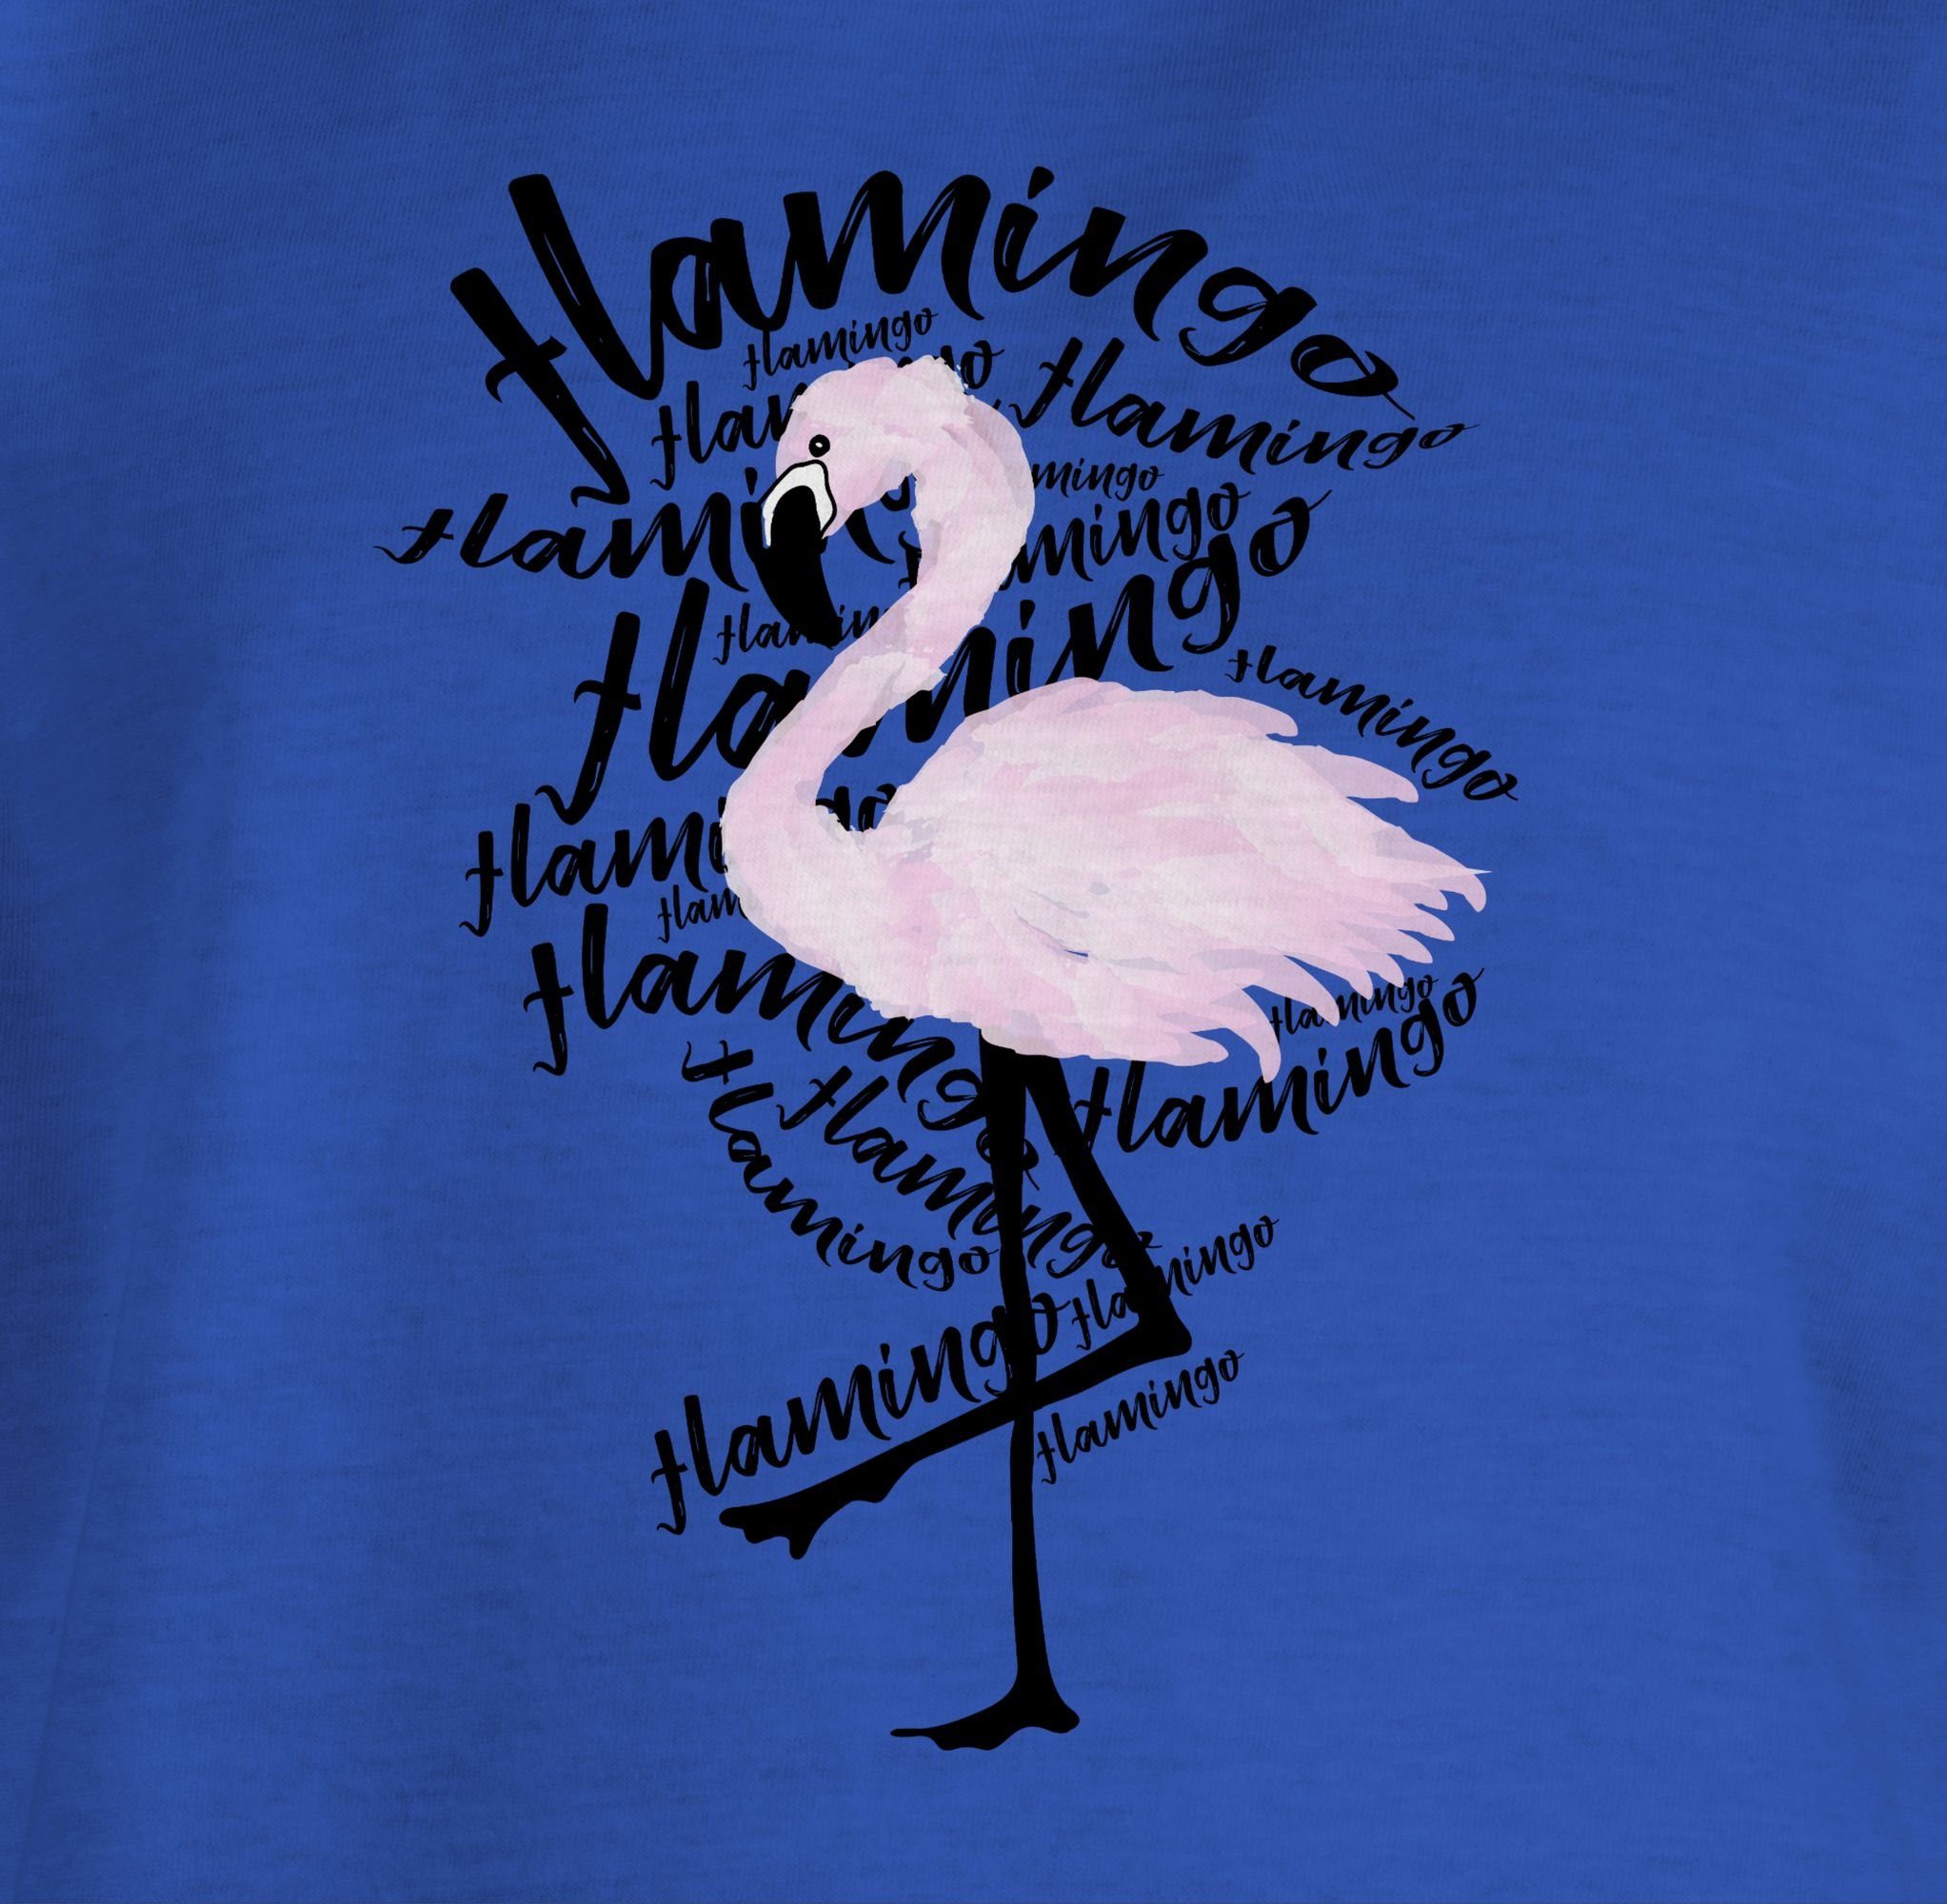 Shirtracer Tiermotiv Animal T-Shirt 3 Print Royalblau Flamingo